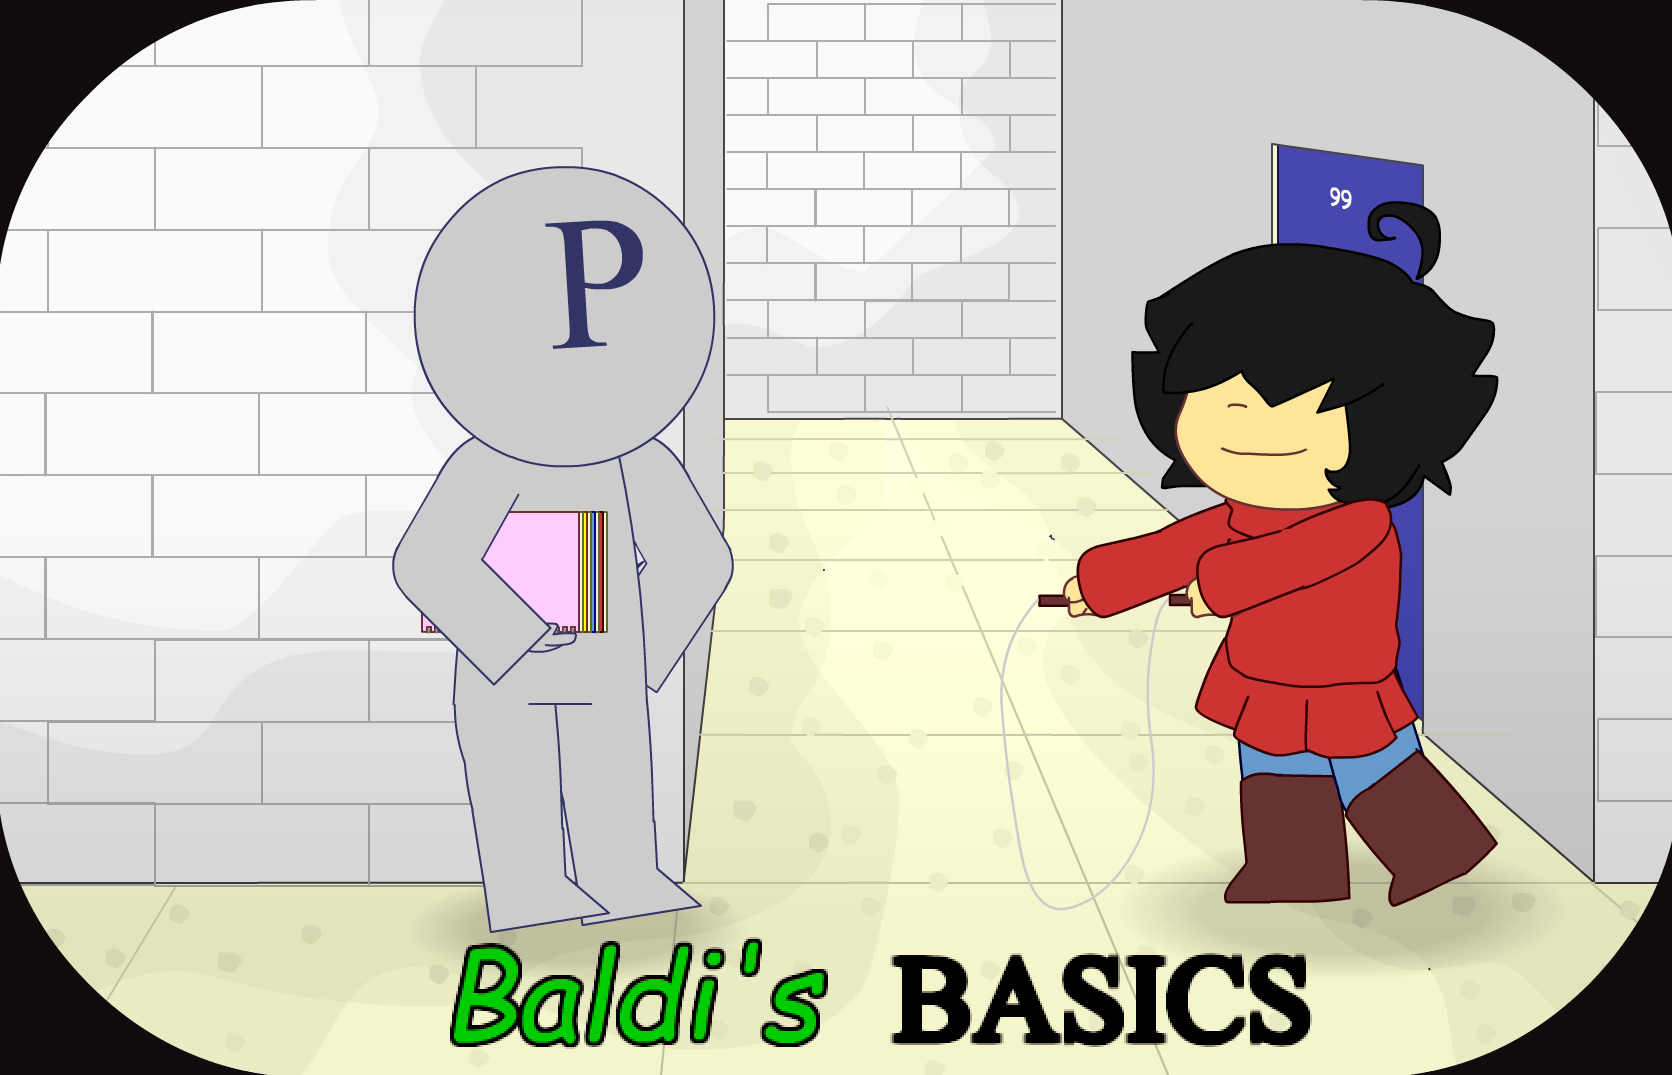 Baldis Basics Playtime